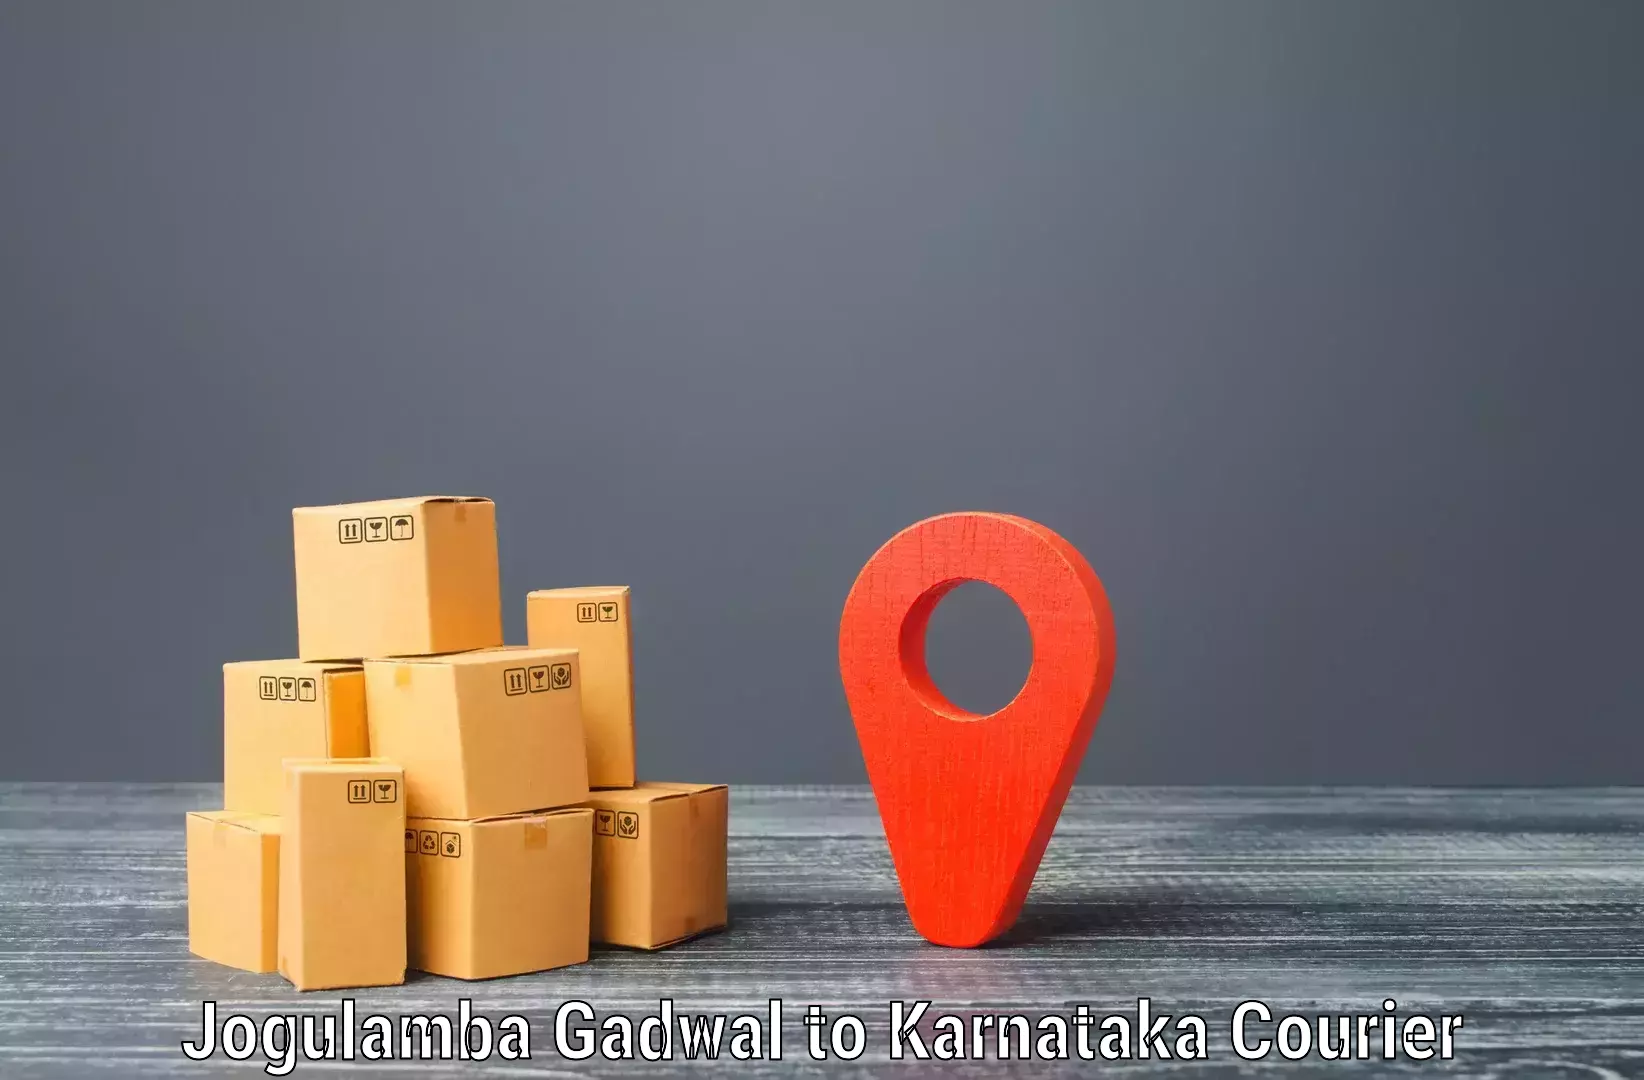 User-friendly courier app Jogulamba Gadwal to Hukkeri